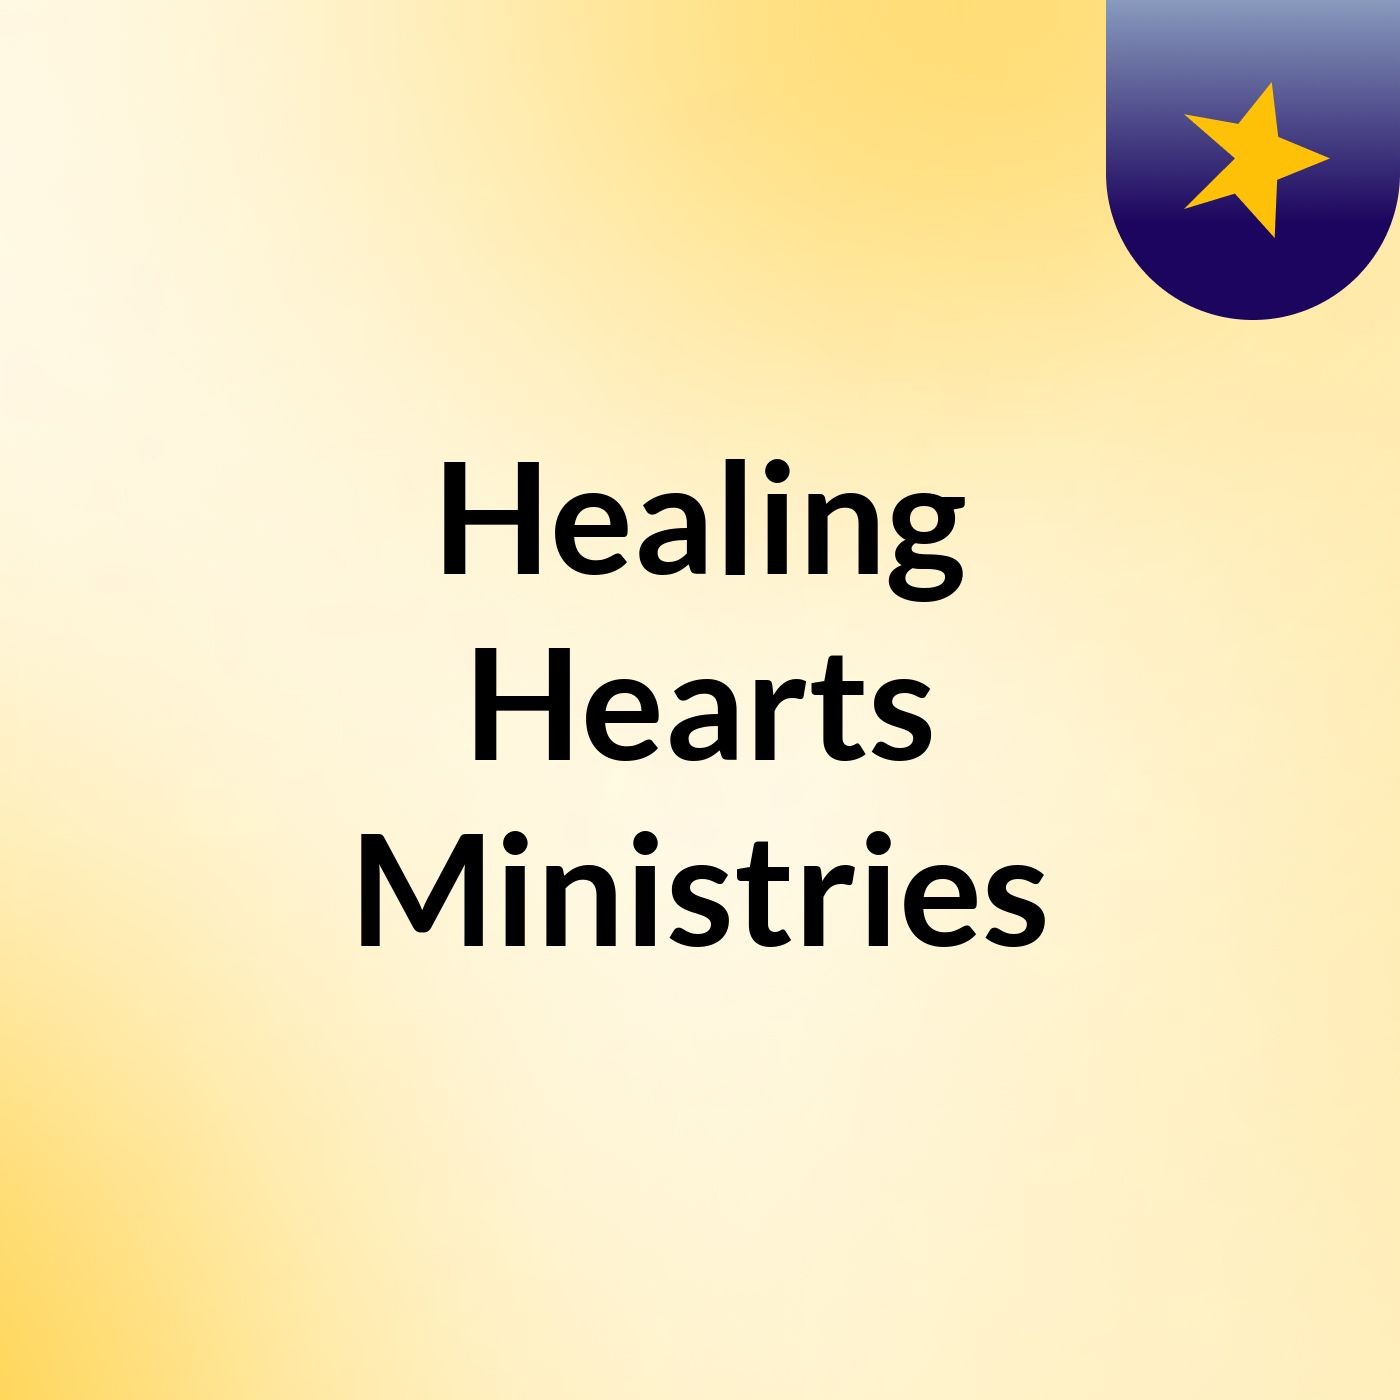 Healing Hearts Ministries